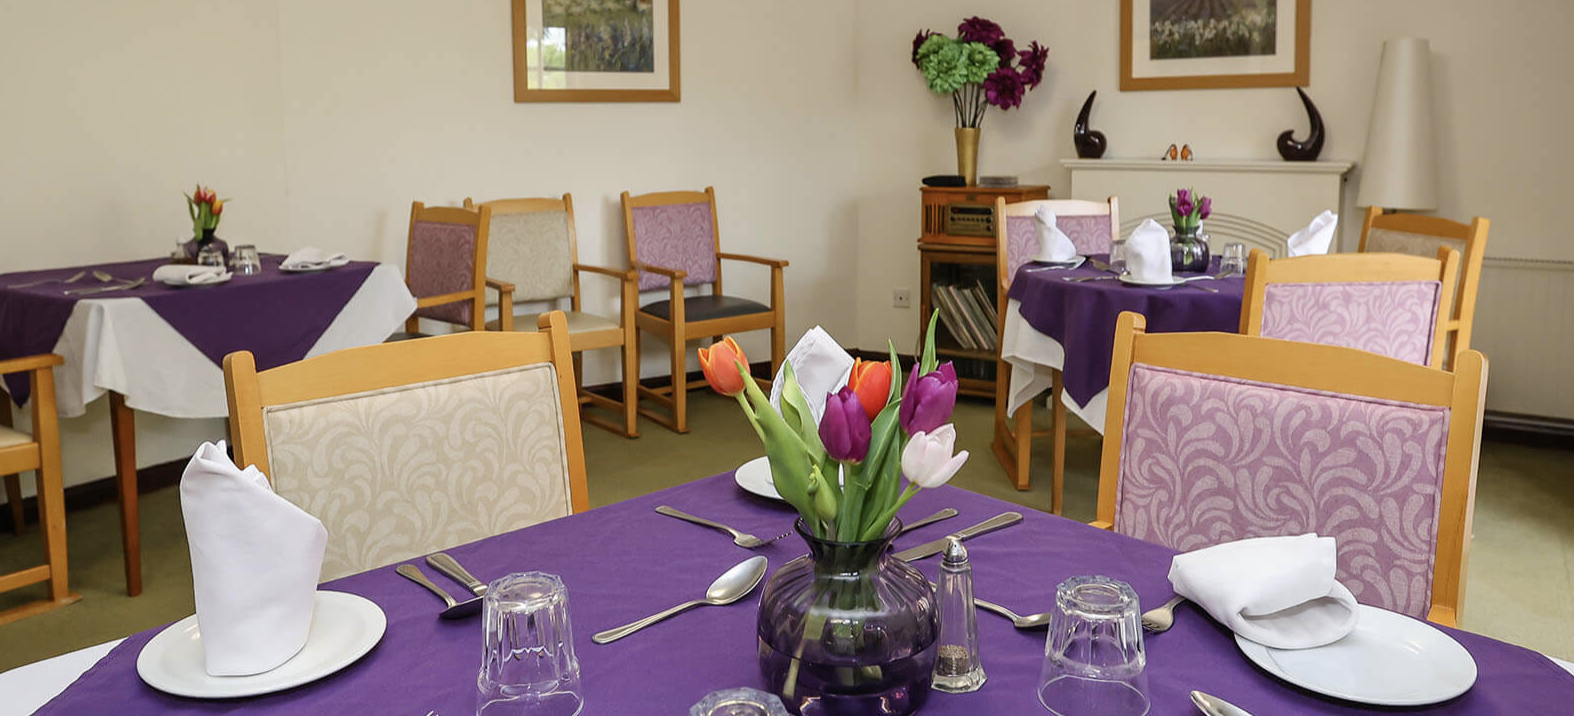 Dining room of Fremington Manor care home in Barnstaple, Devon